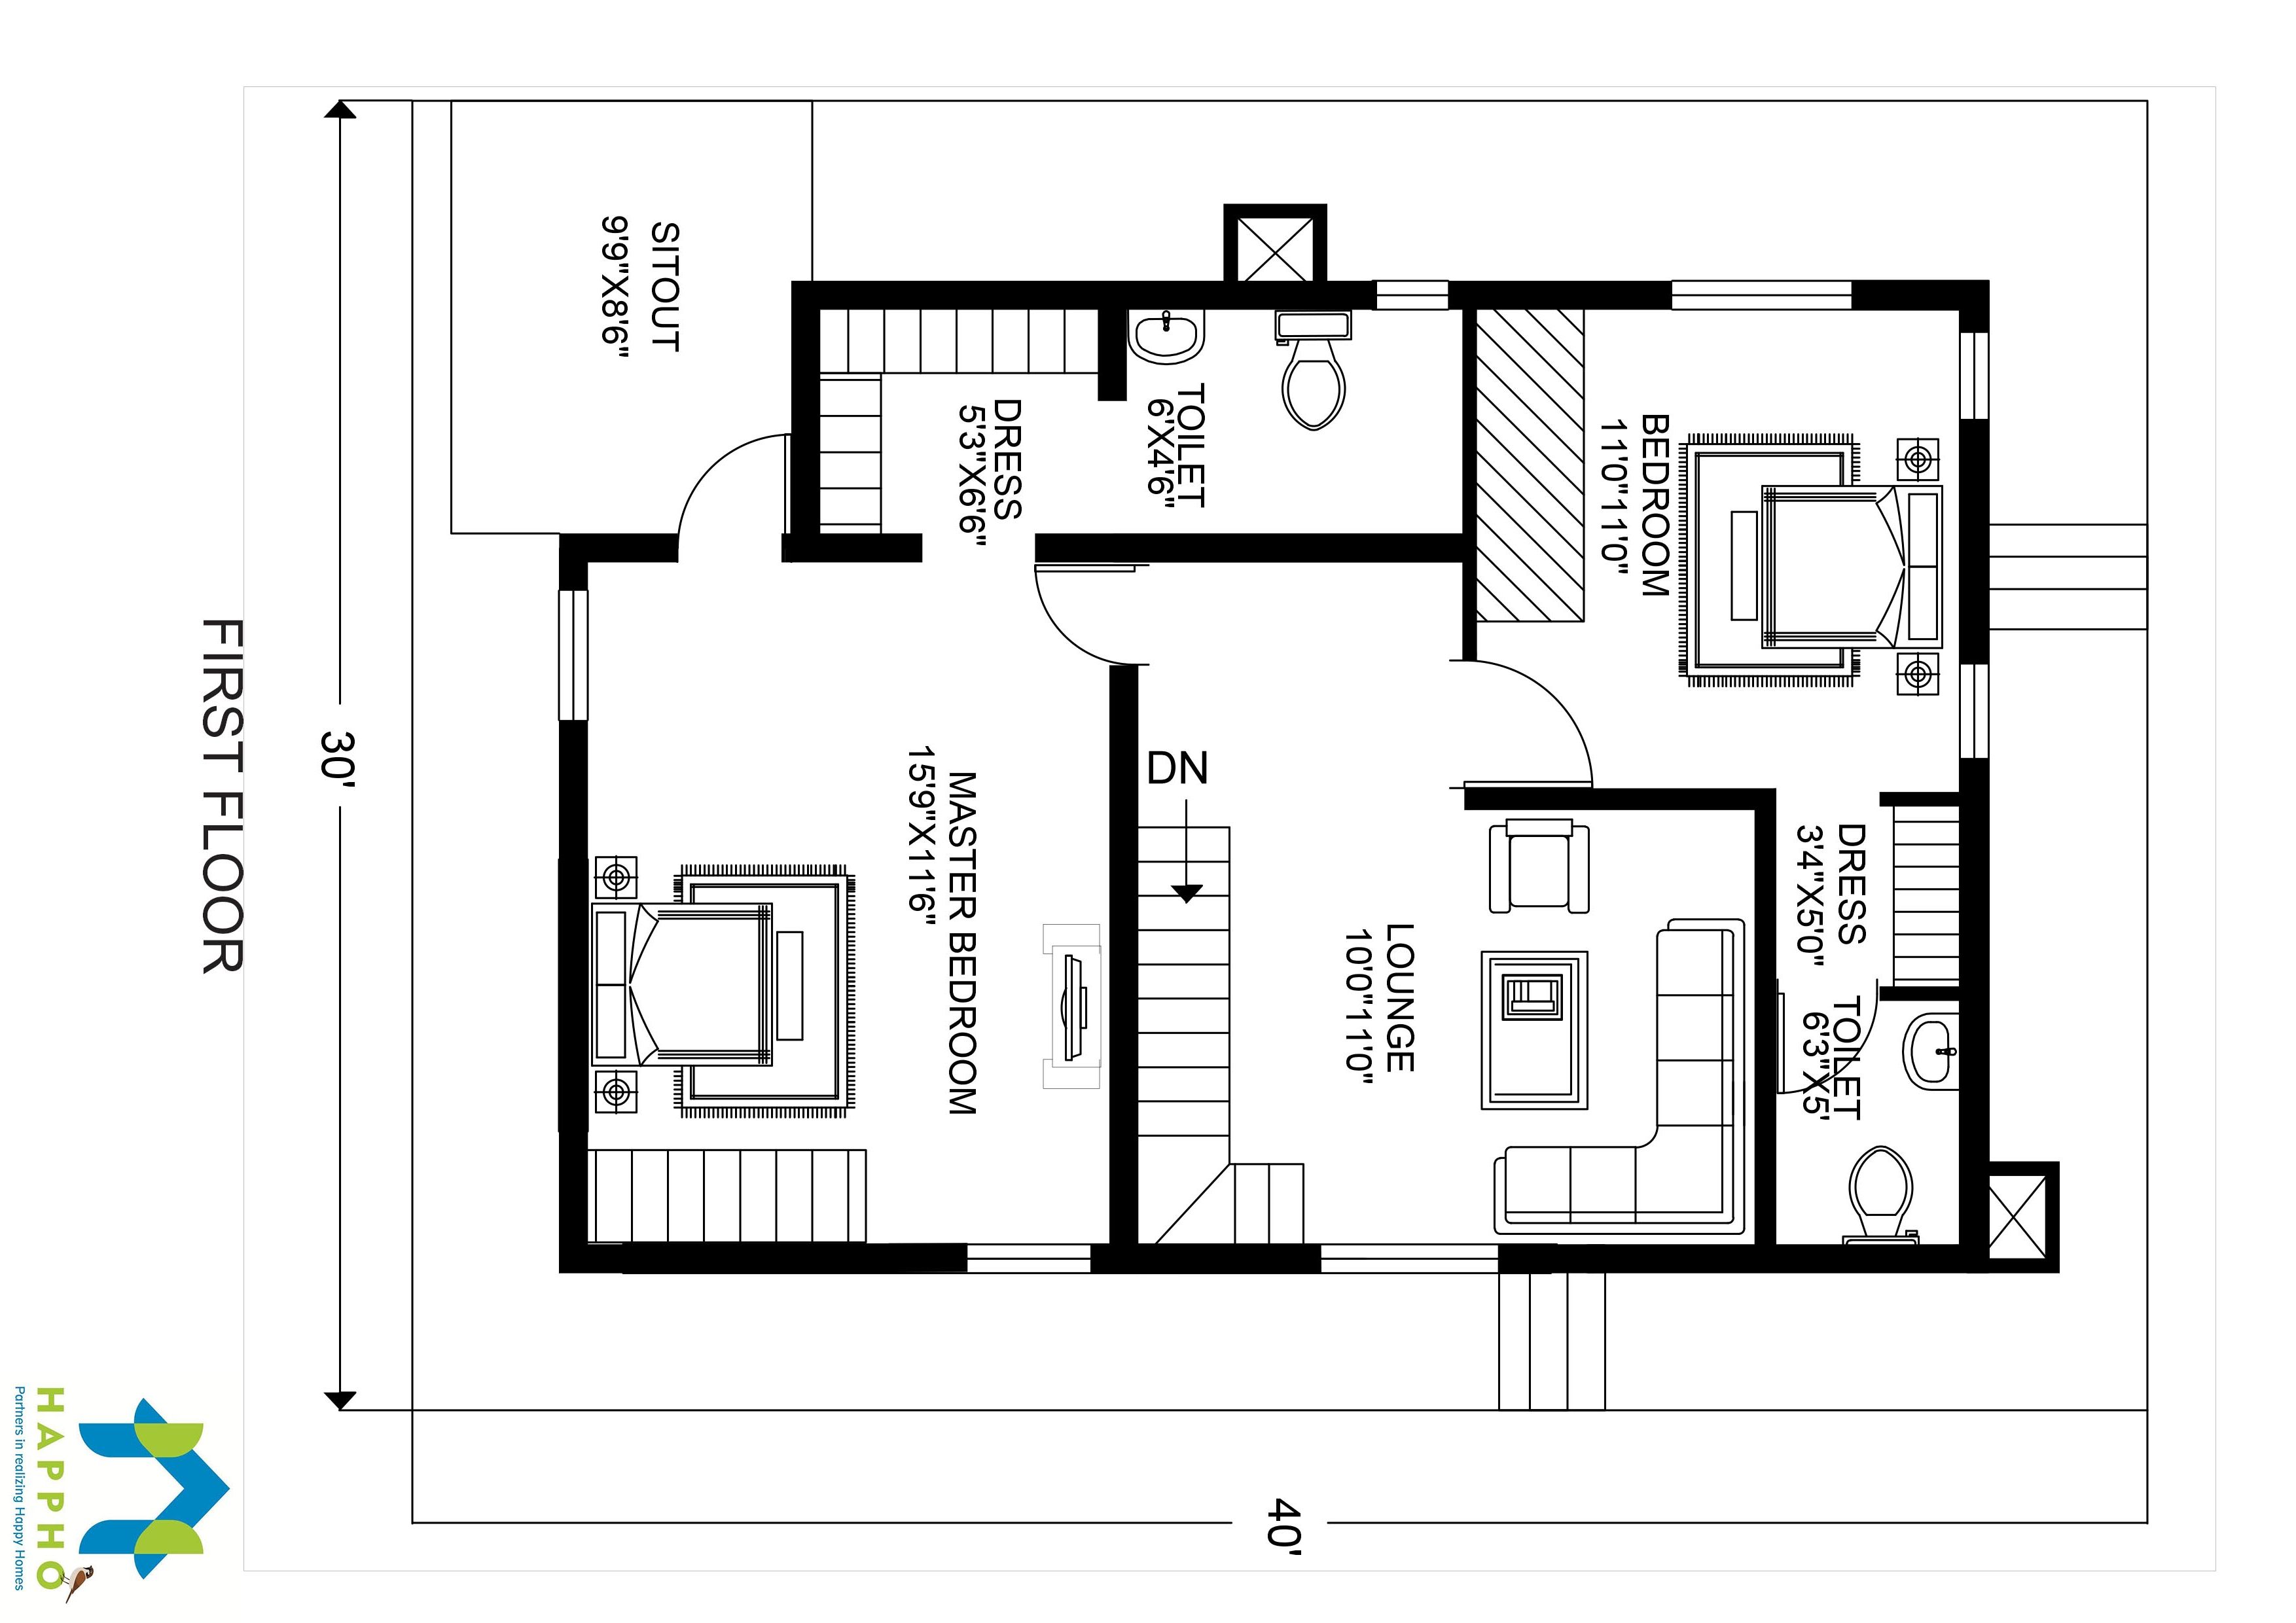 3-BHK Floor Plan for 30 X 40 Plot (1200 Square Feet/134 SquareYards ...